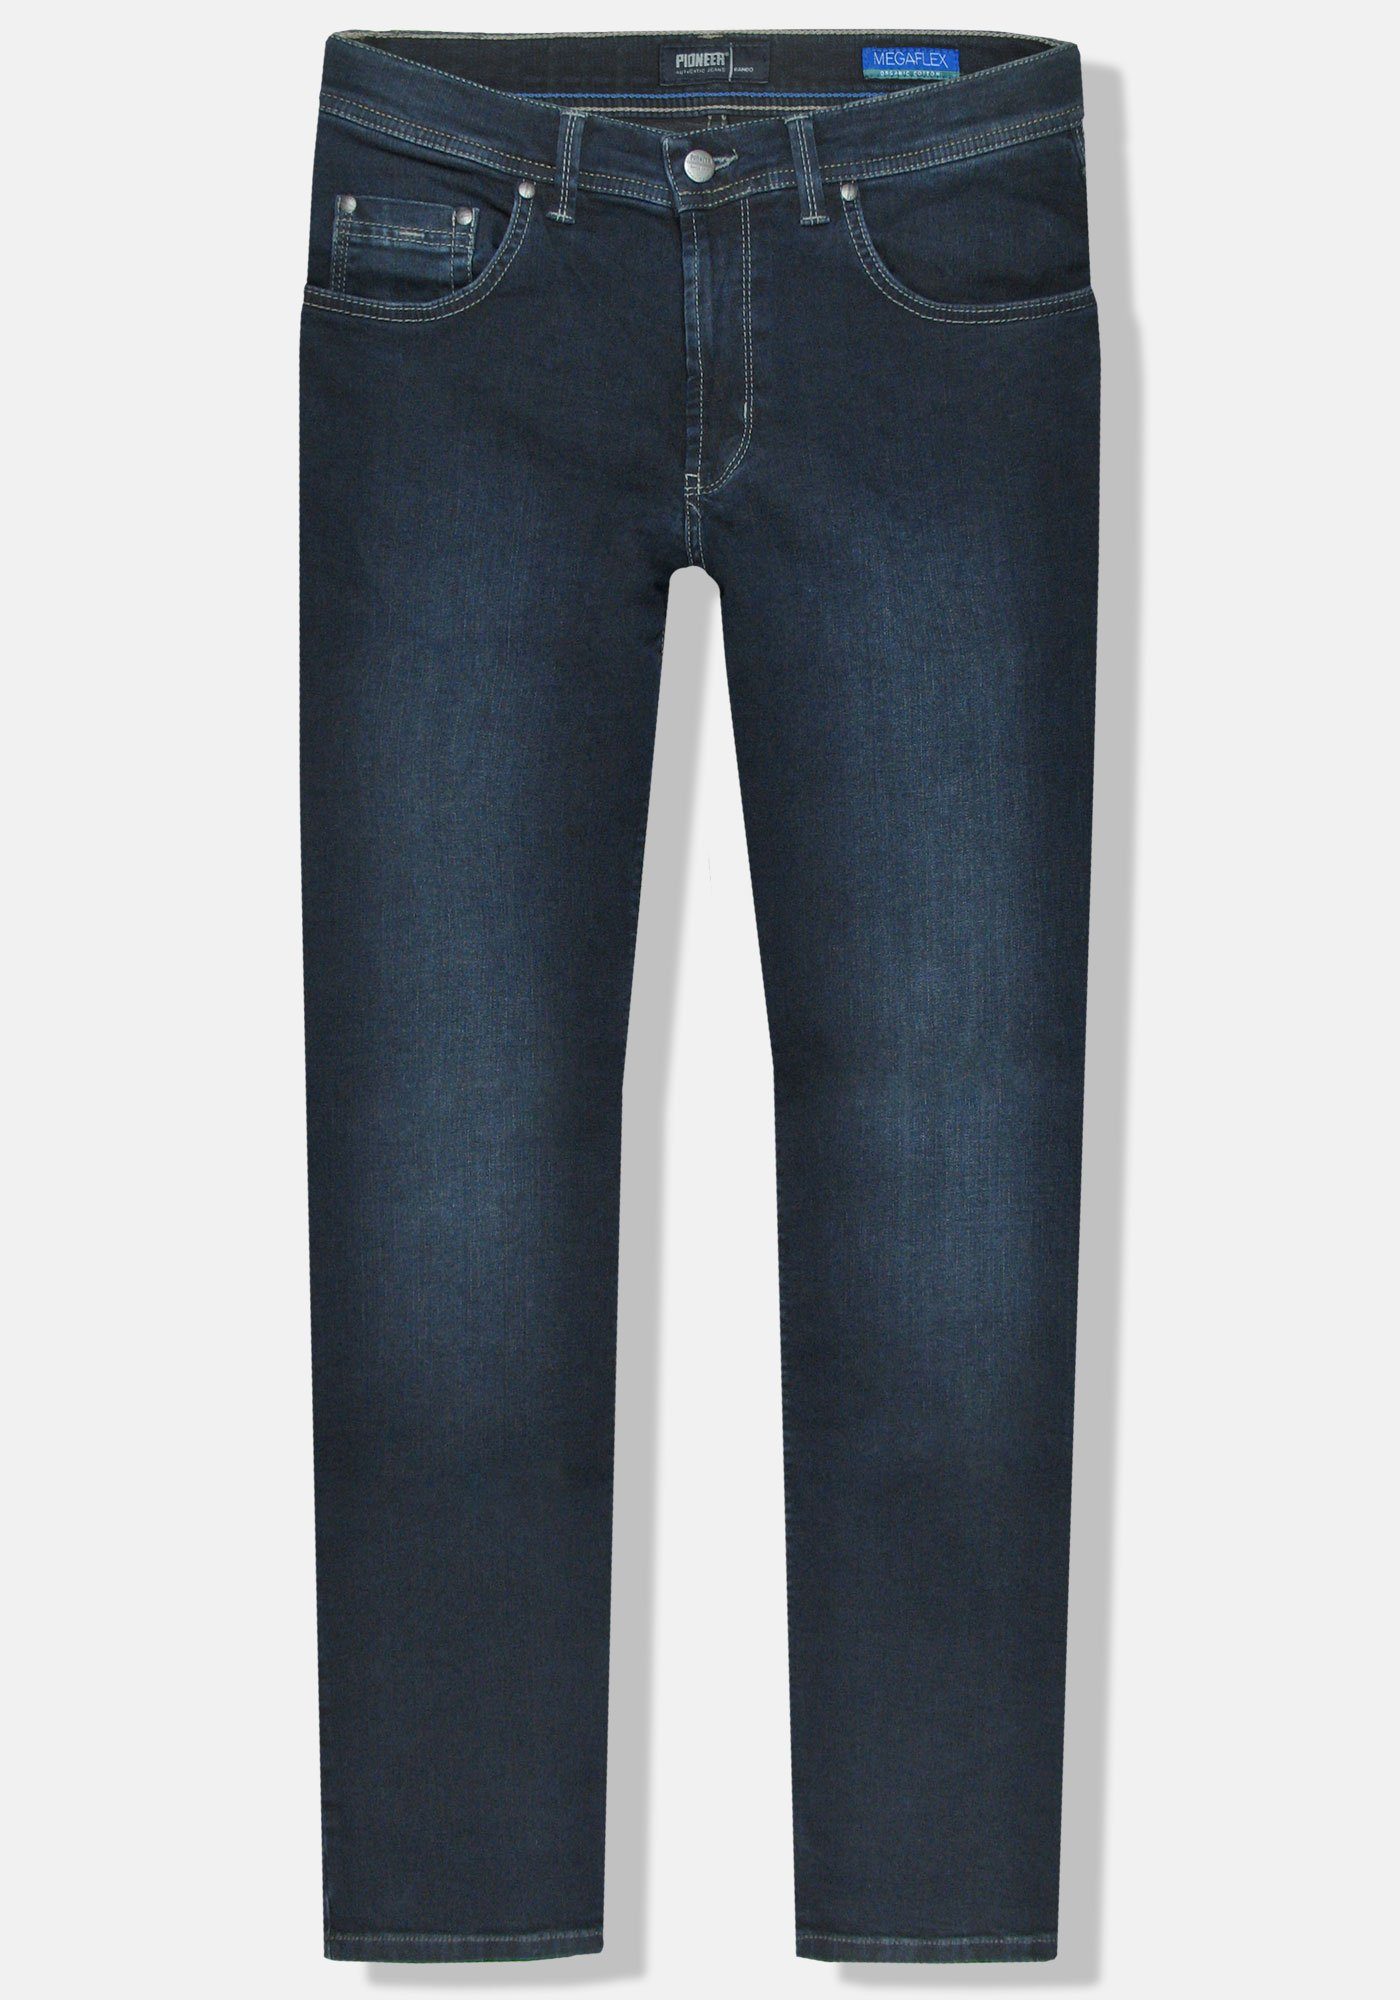 Pioneer Authentic Jeans 5-Pocket-Jeans Rando Blue Stretch-Denim Megaflex Used Night